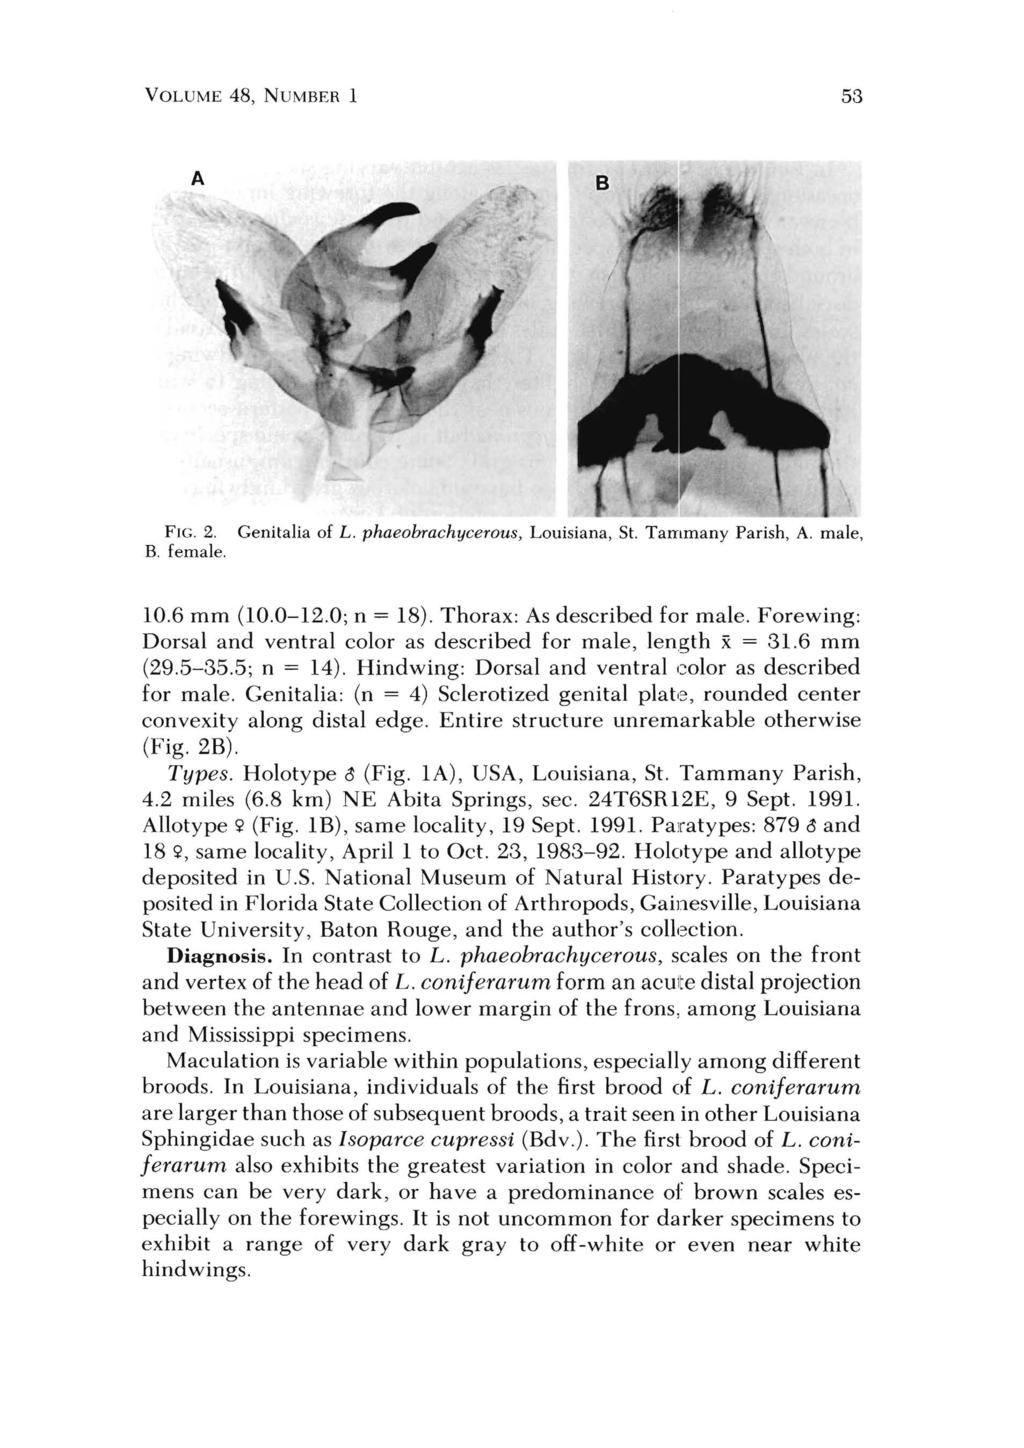 VOLUME 48, NUMBER 1 53 FIG. 2. B. female. Genitalia of L. phaeobrachycerous, Louisiana, St. Tammany Parish, A. male, 10.6 mm (10.0-12.0; n = 18). Thorax: As described for male.